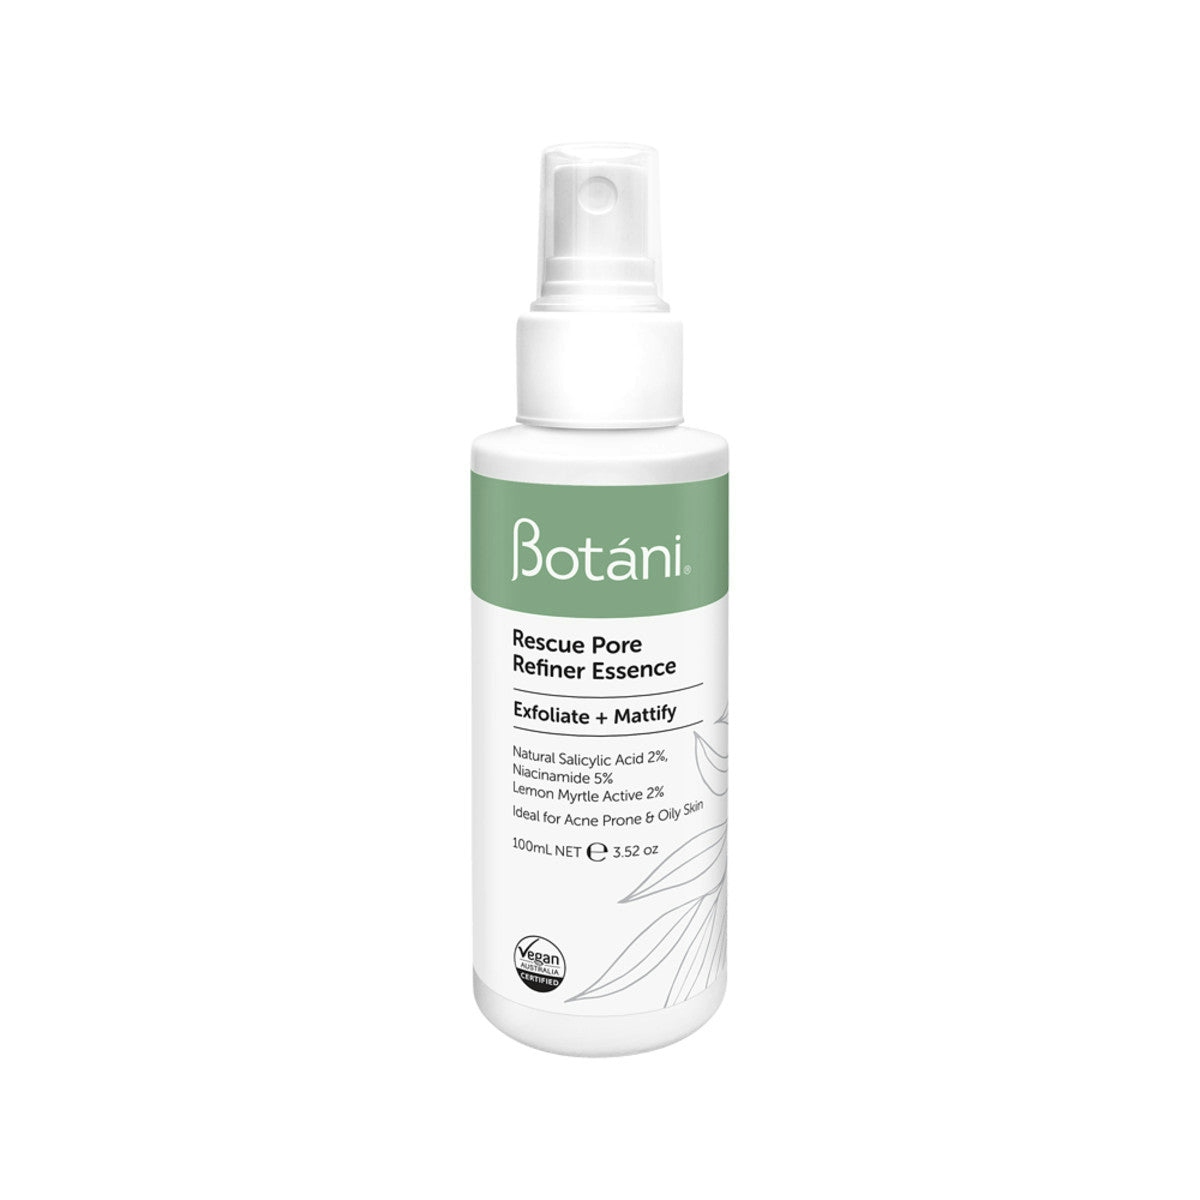 image of Botani Rescue Pore Refiner Essence (Exfoliate + Mattify) 100ml on white background 